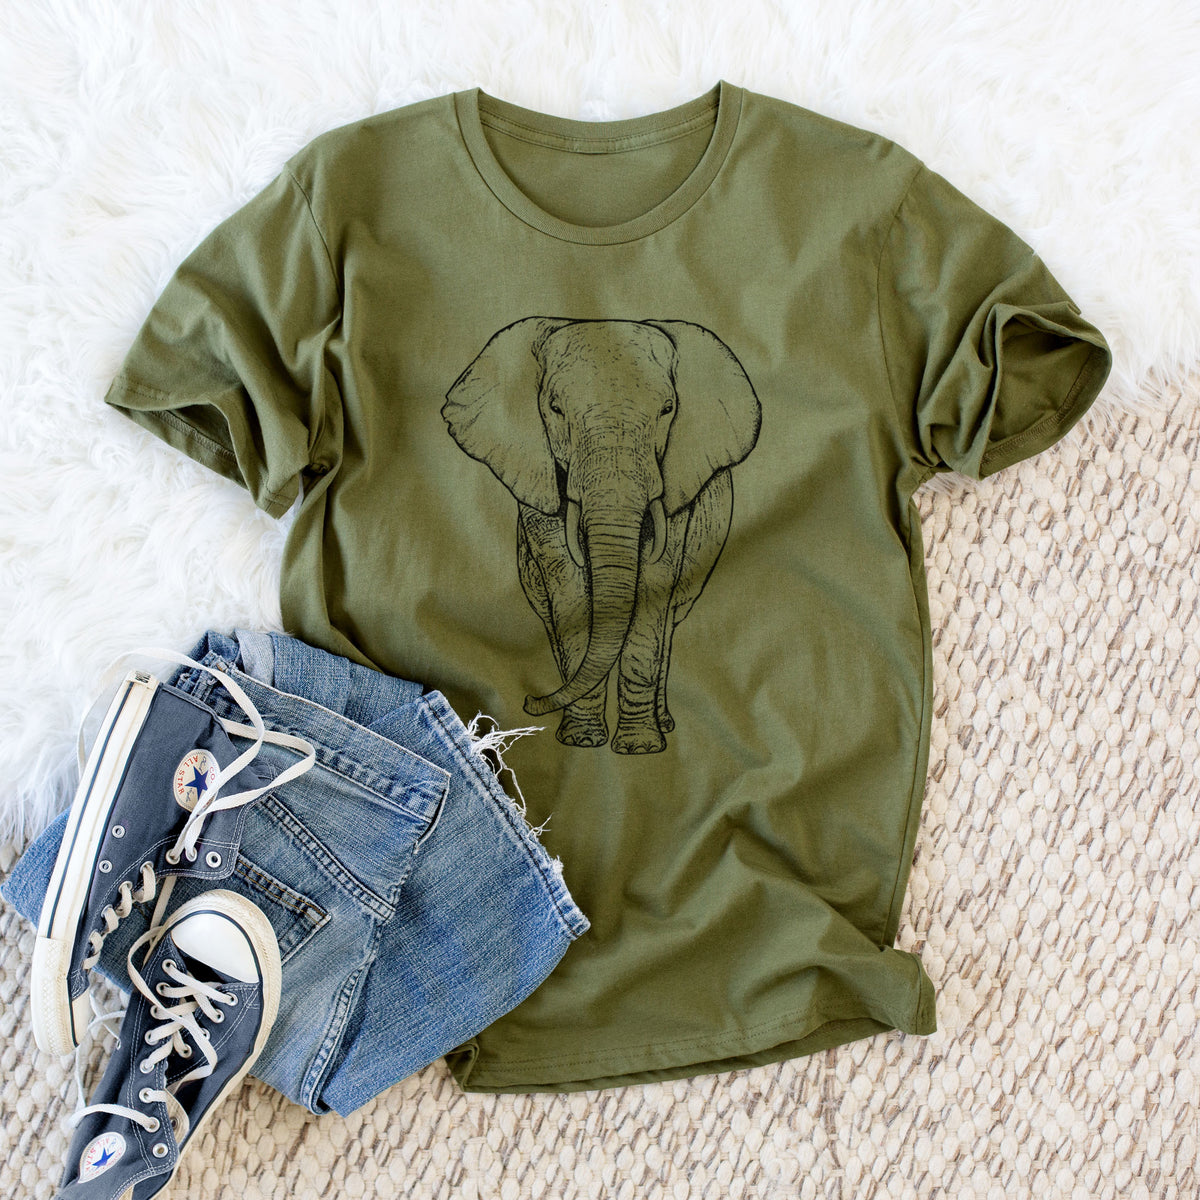 Loxodonta africana - African Elephant - Unisex Crewneck - Made in USA - 100% Organic Cotton